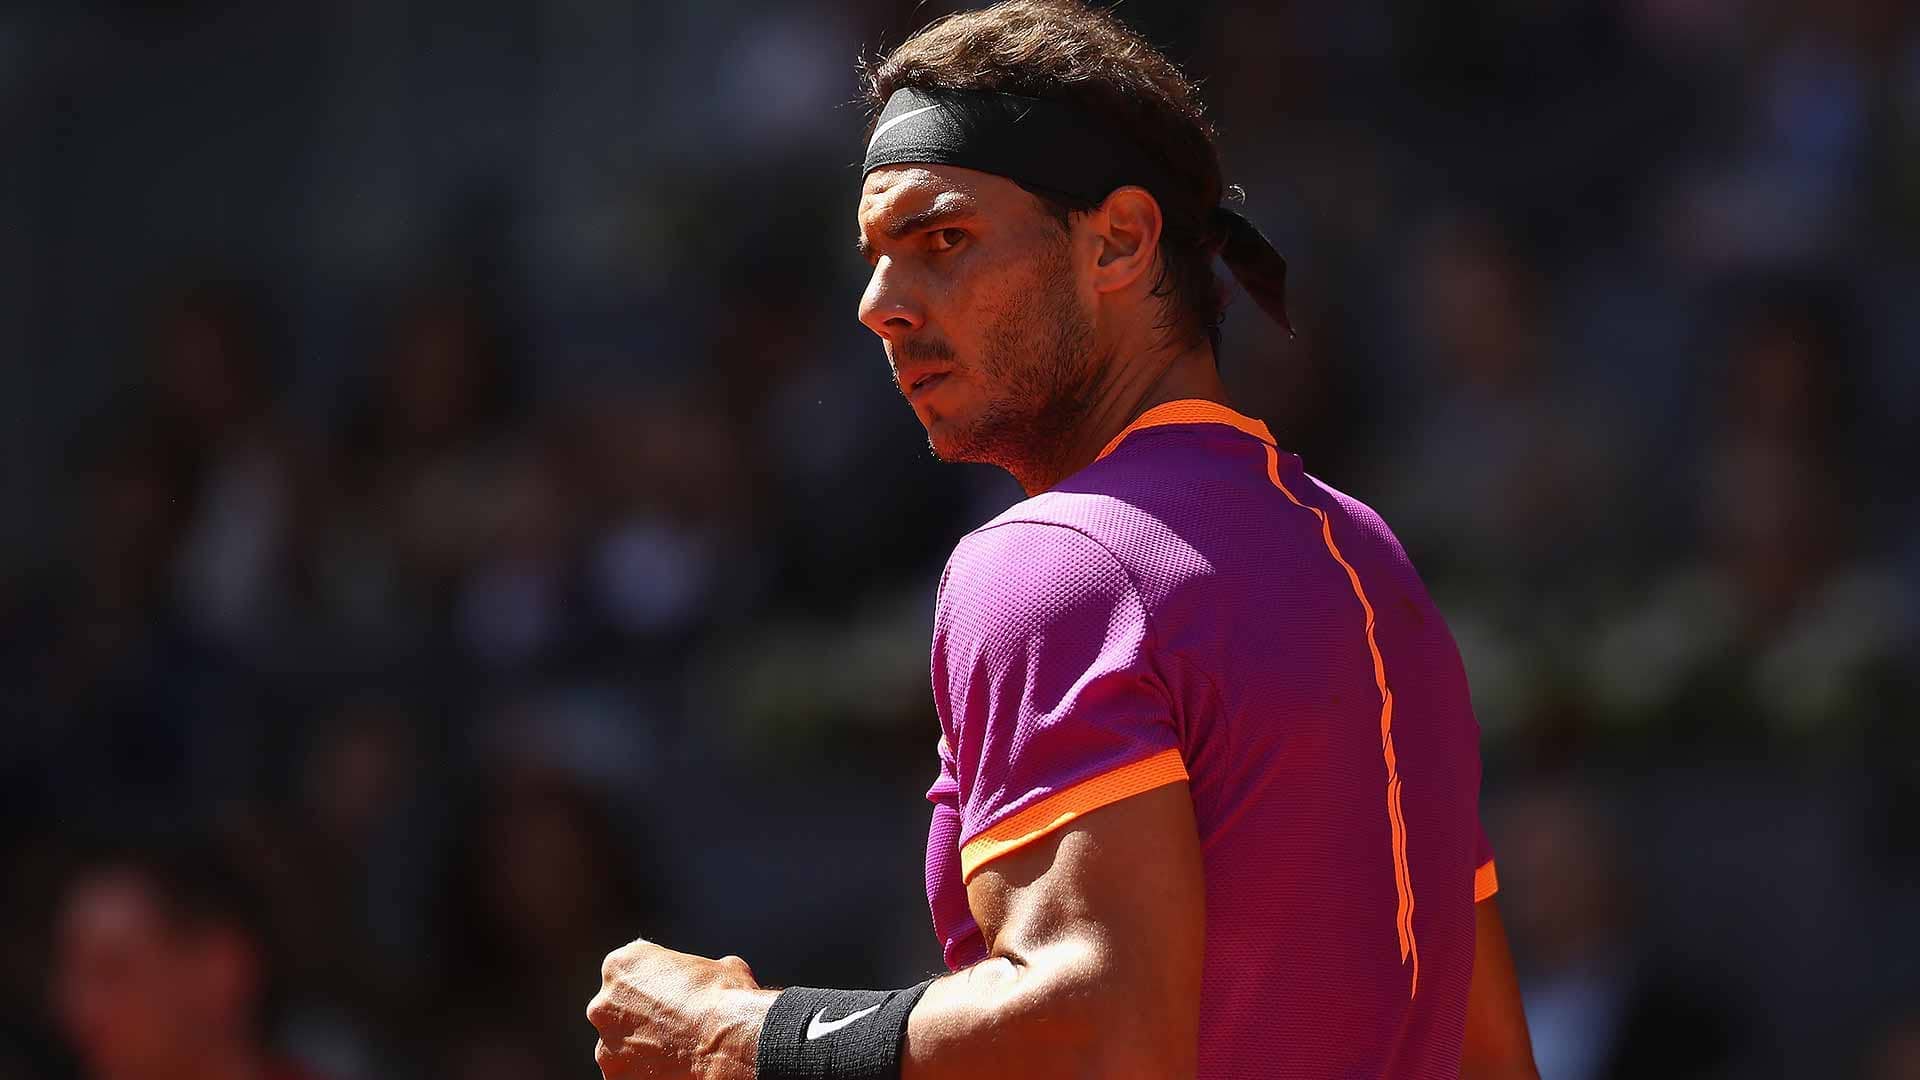 Rafael Nadal looks to end Novak Djokovic's seven-match win streak against him.